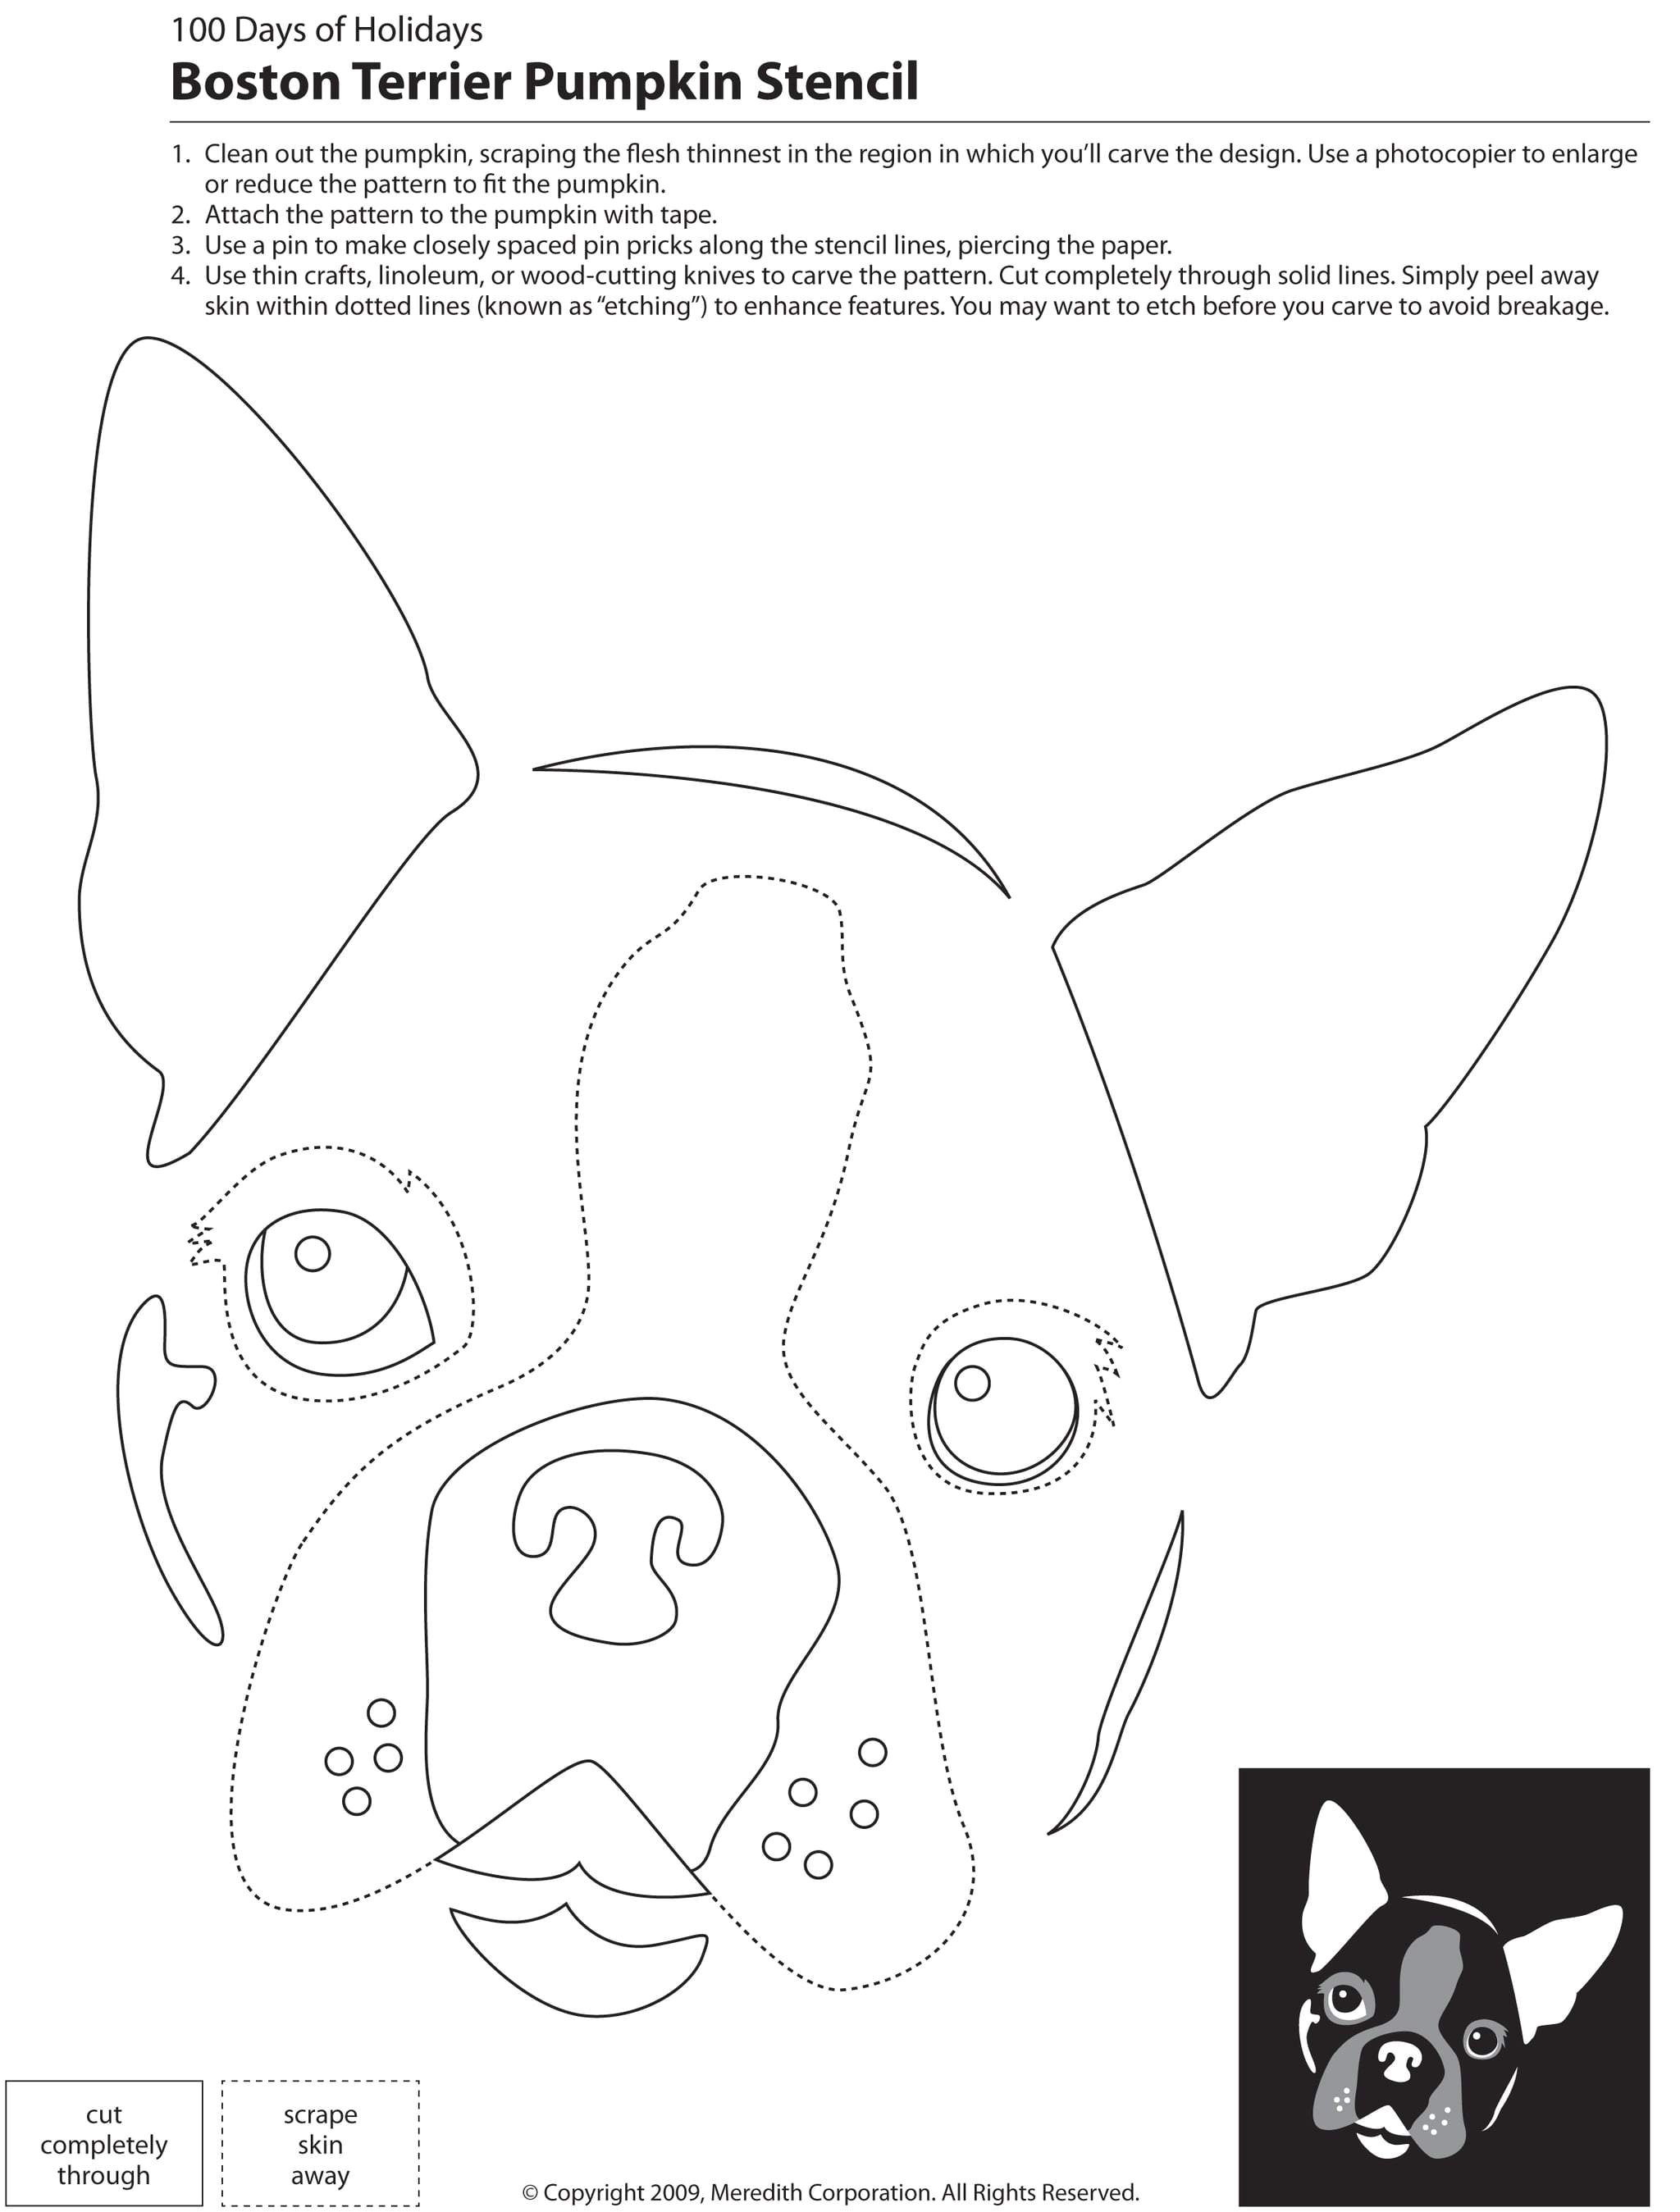 Boston Terrier Pumpkin Stencil 22 Free Pumpkin Carving Dog Stencils Breed Specific